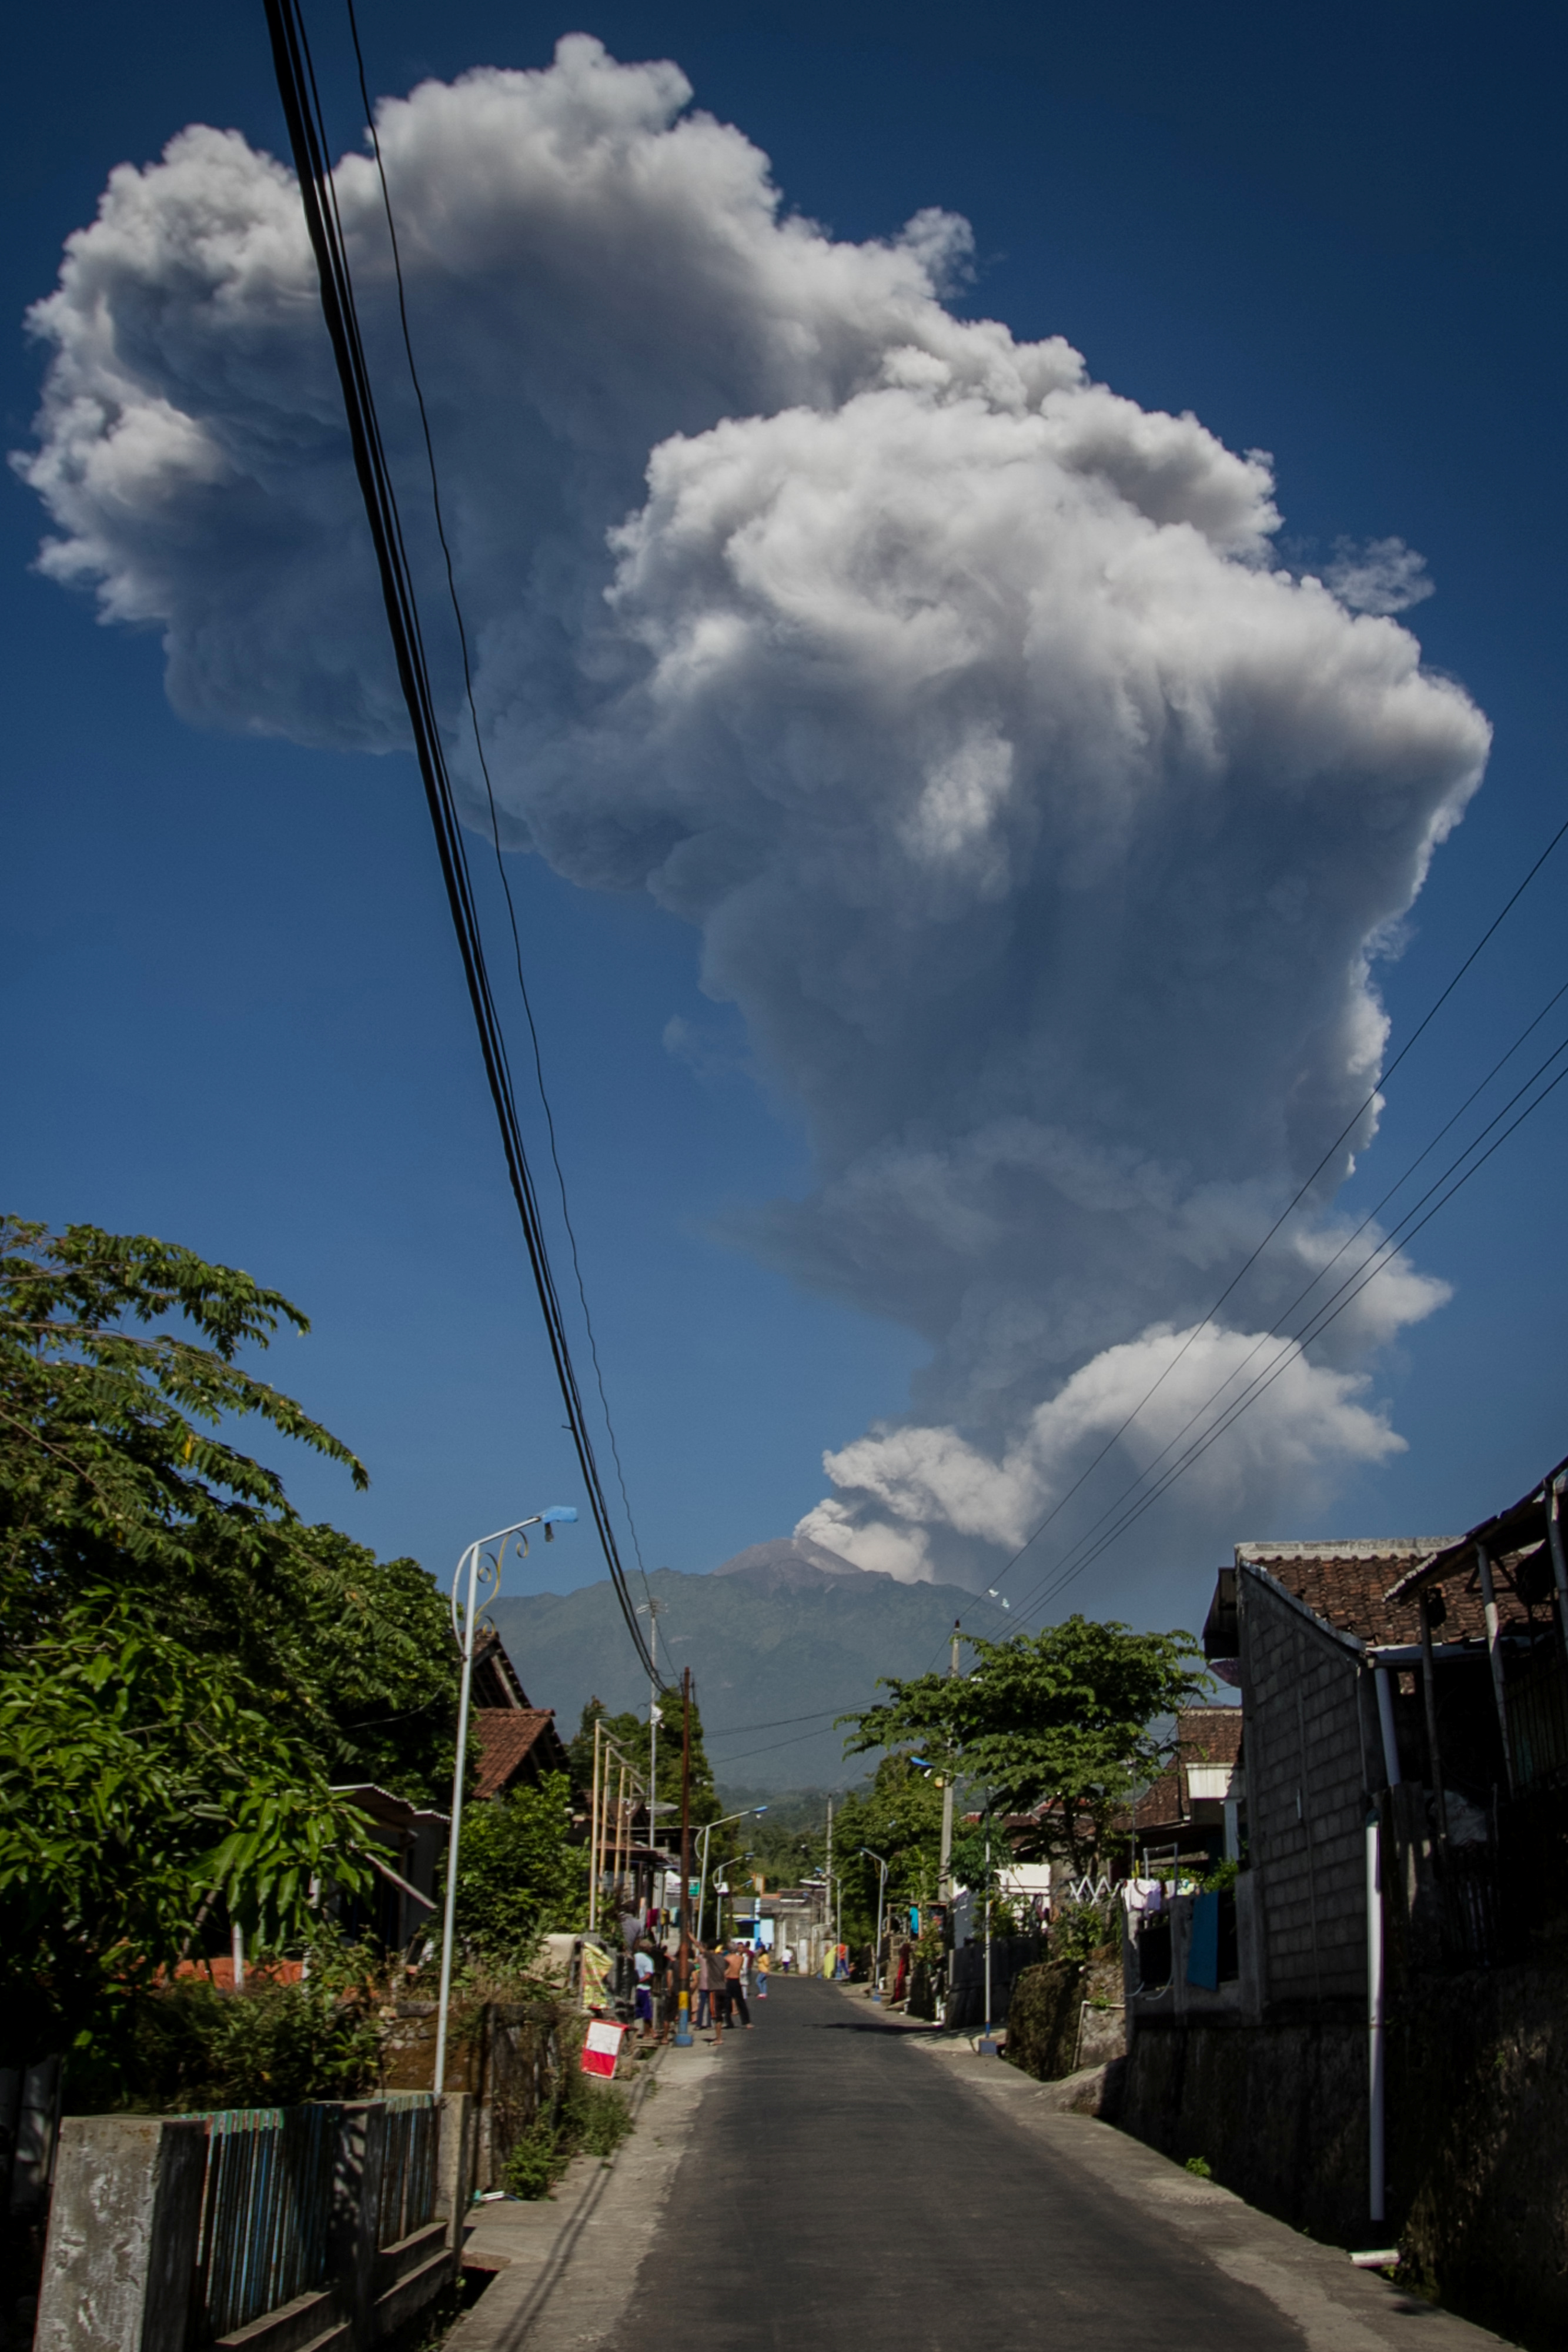 صور انبعاث دخان من بركان فى اندونيسيا (9)